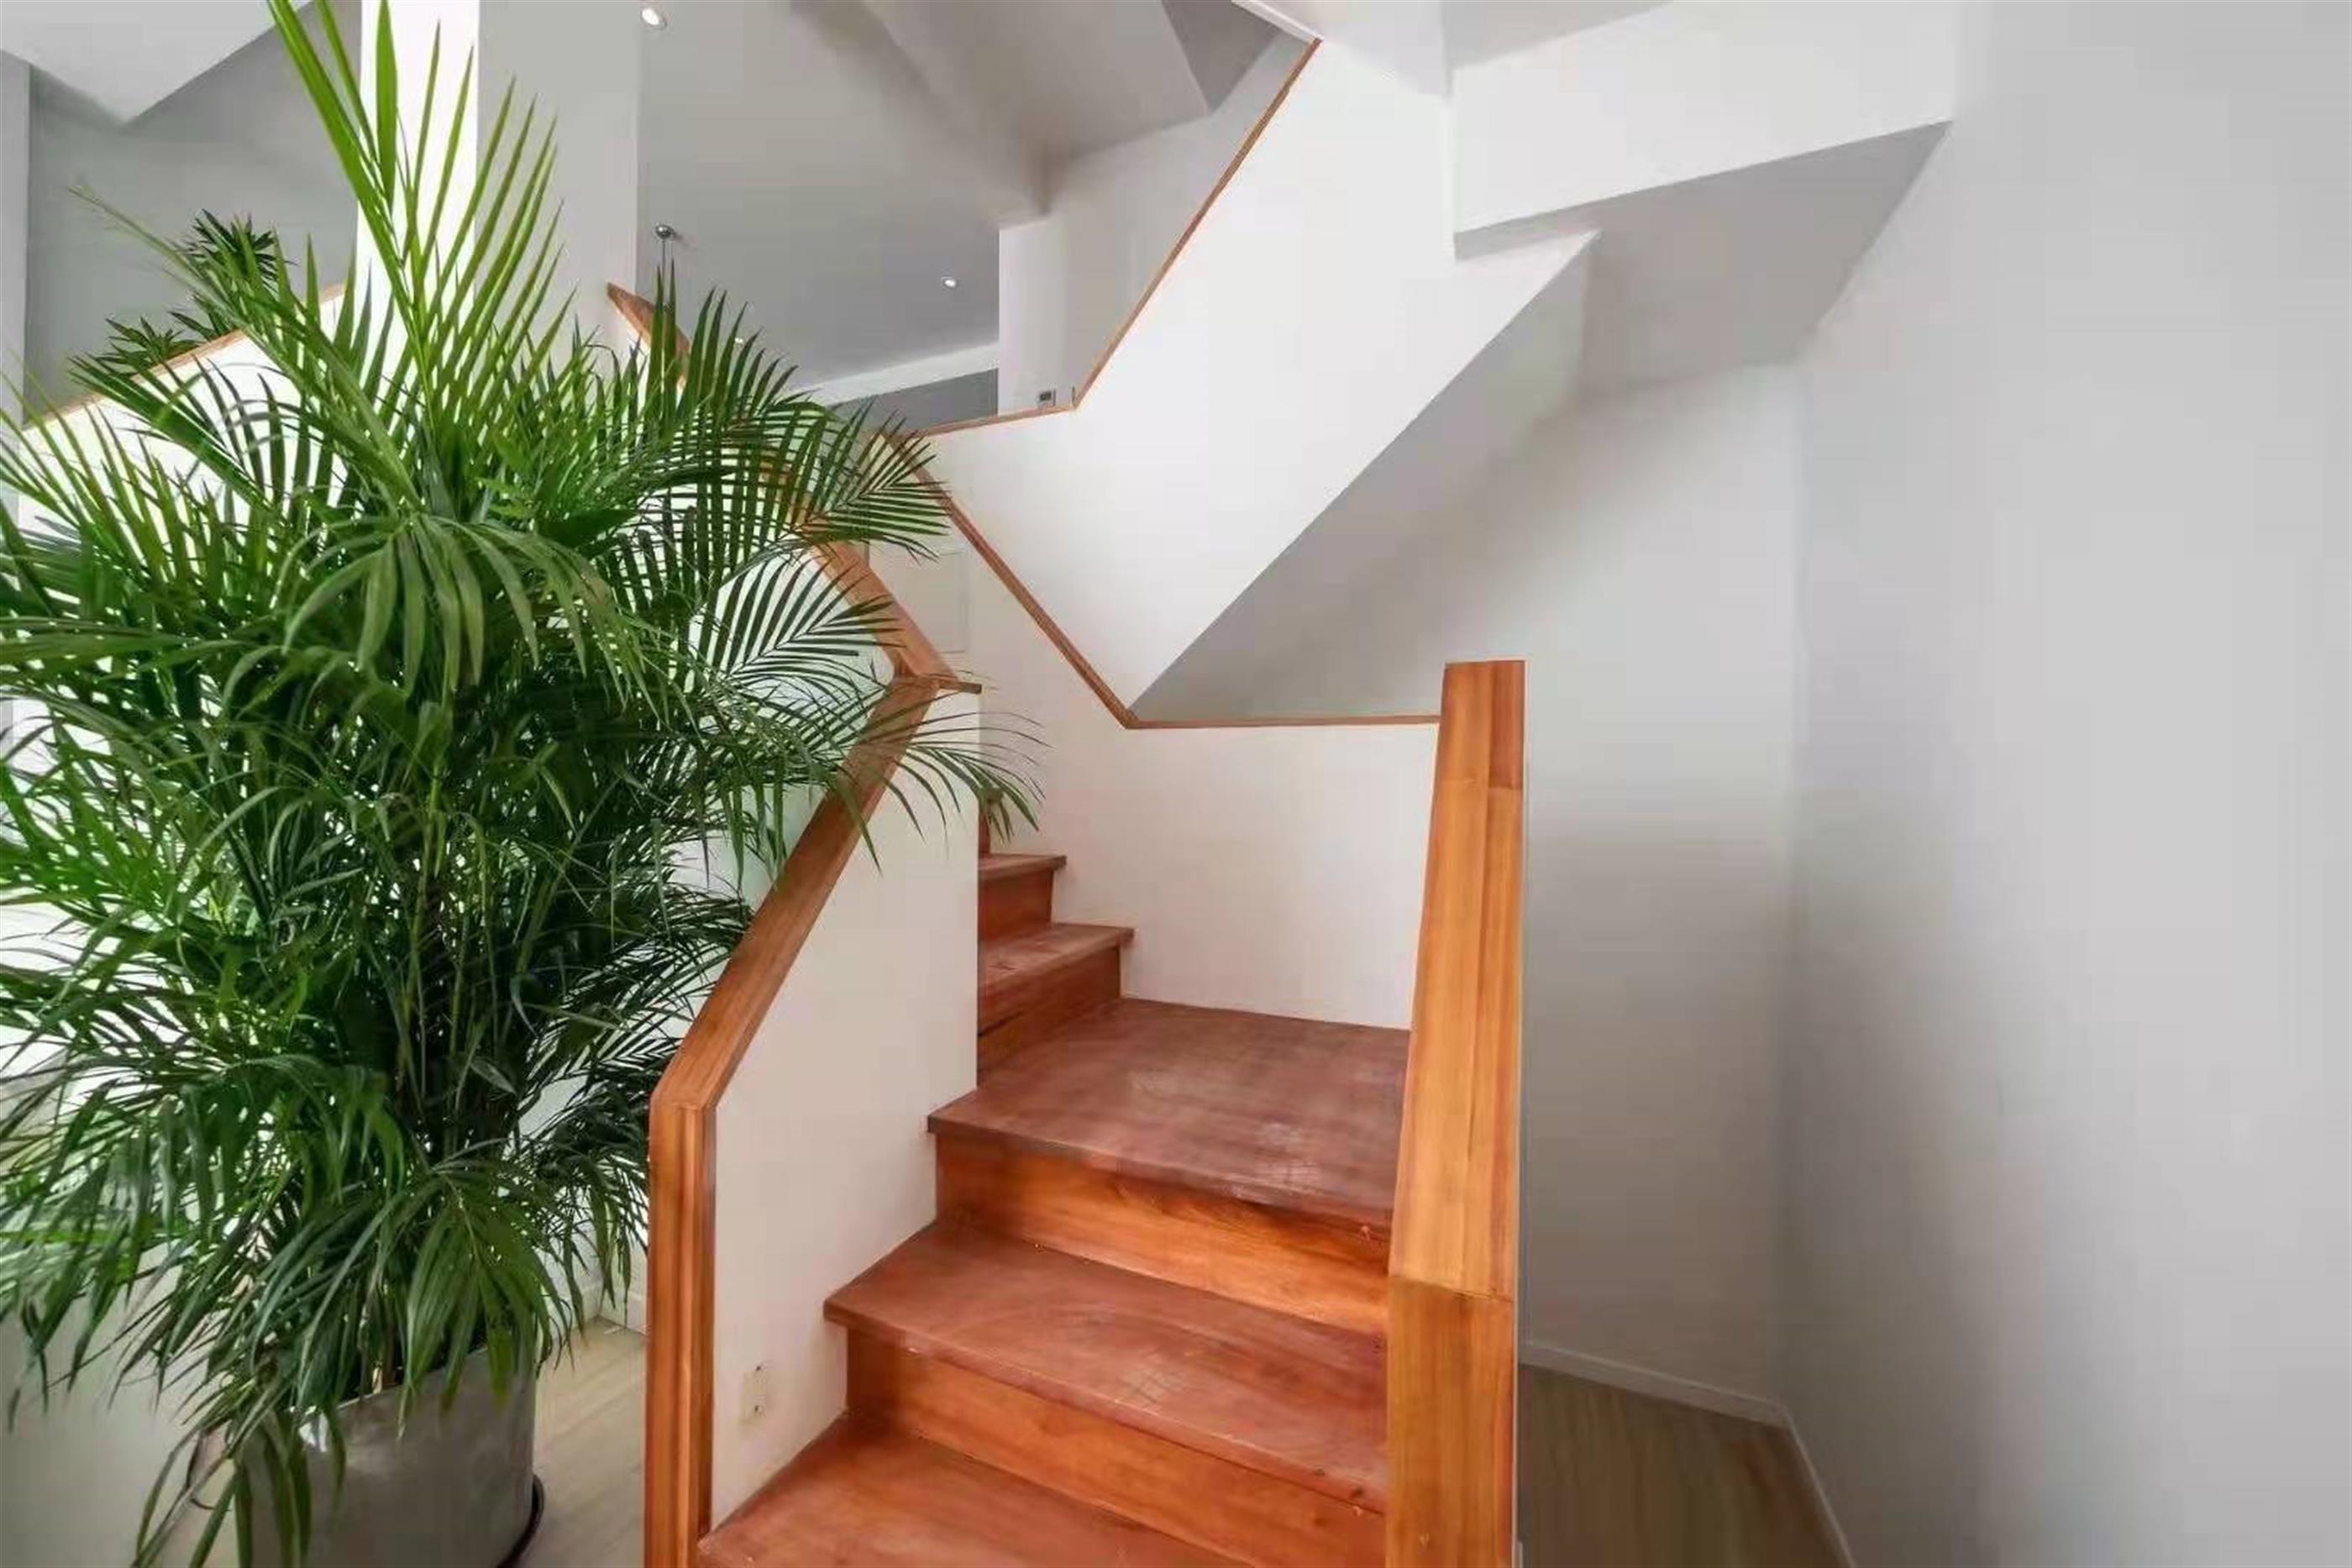 Sleek Stairs Affordable Modern 4-floor 4BR House for Rent in Qingpu Shanghai